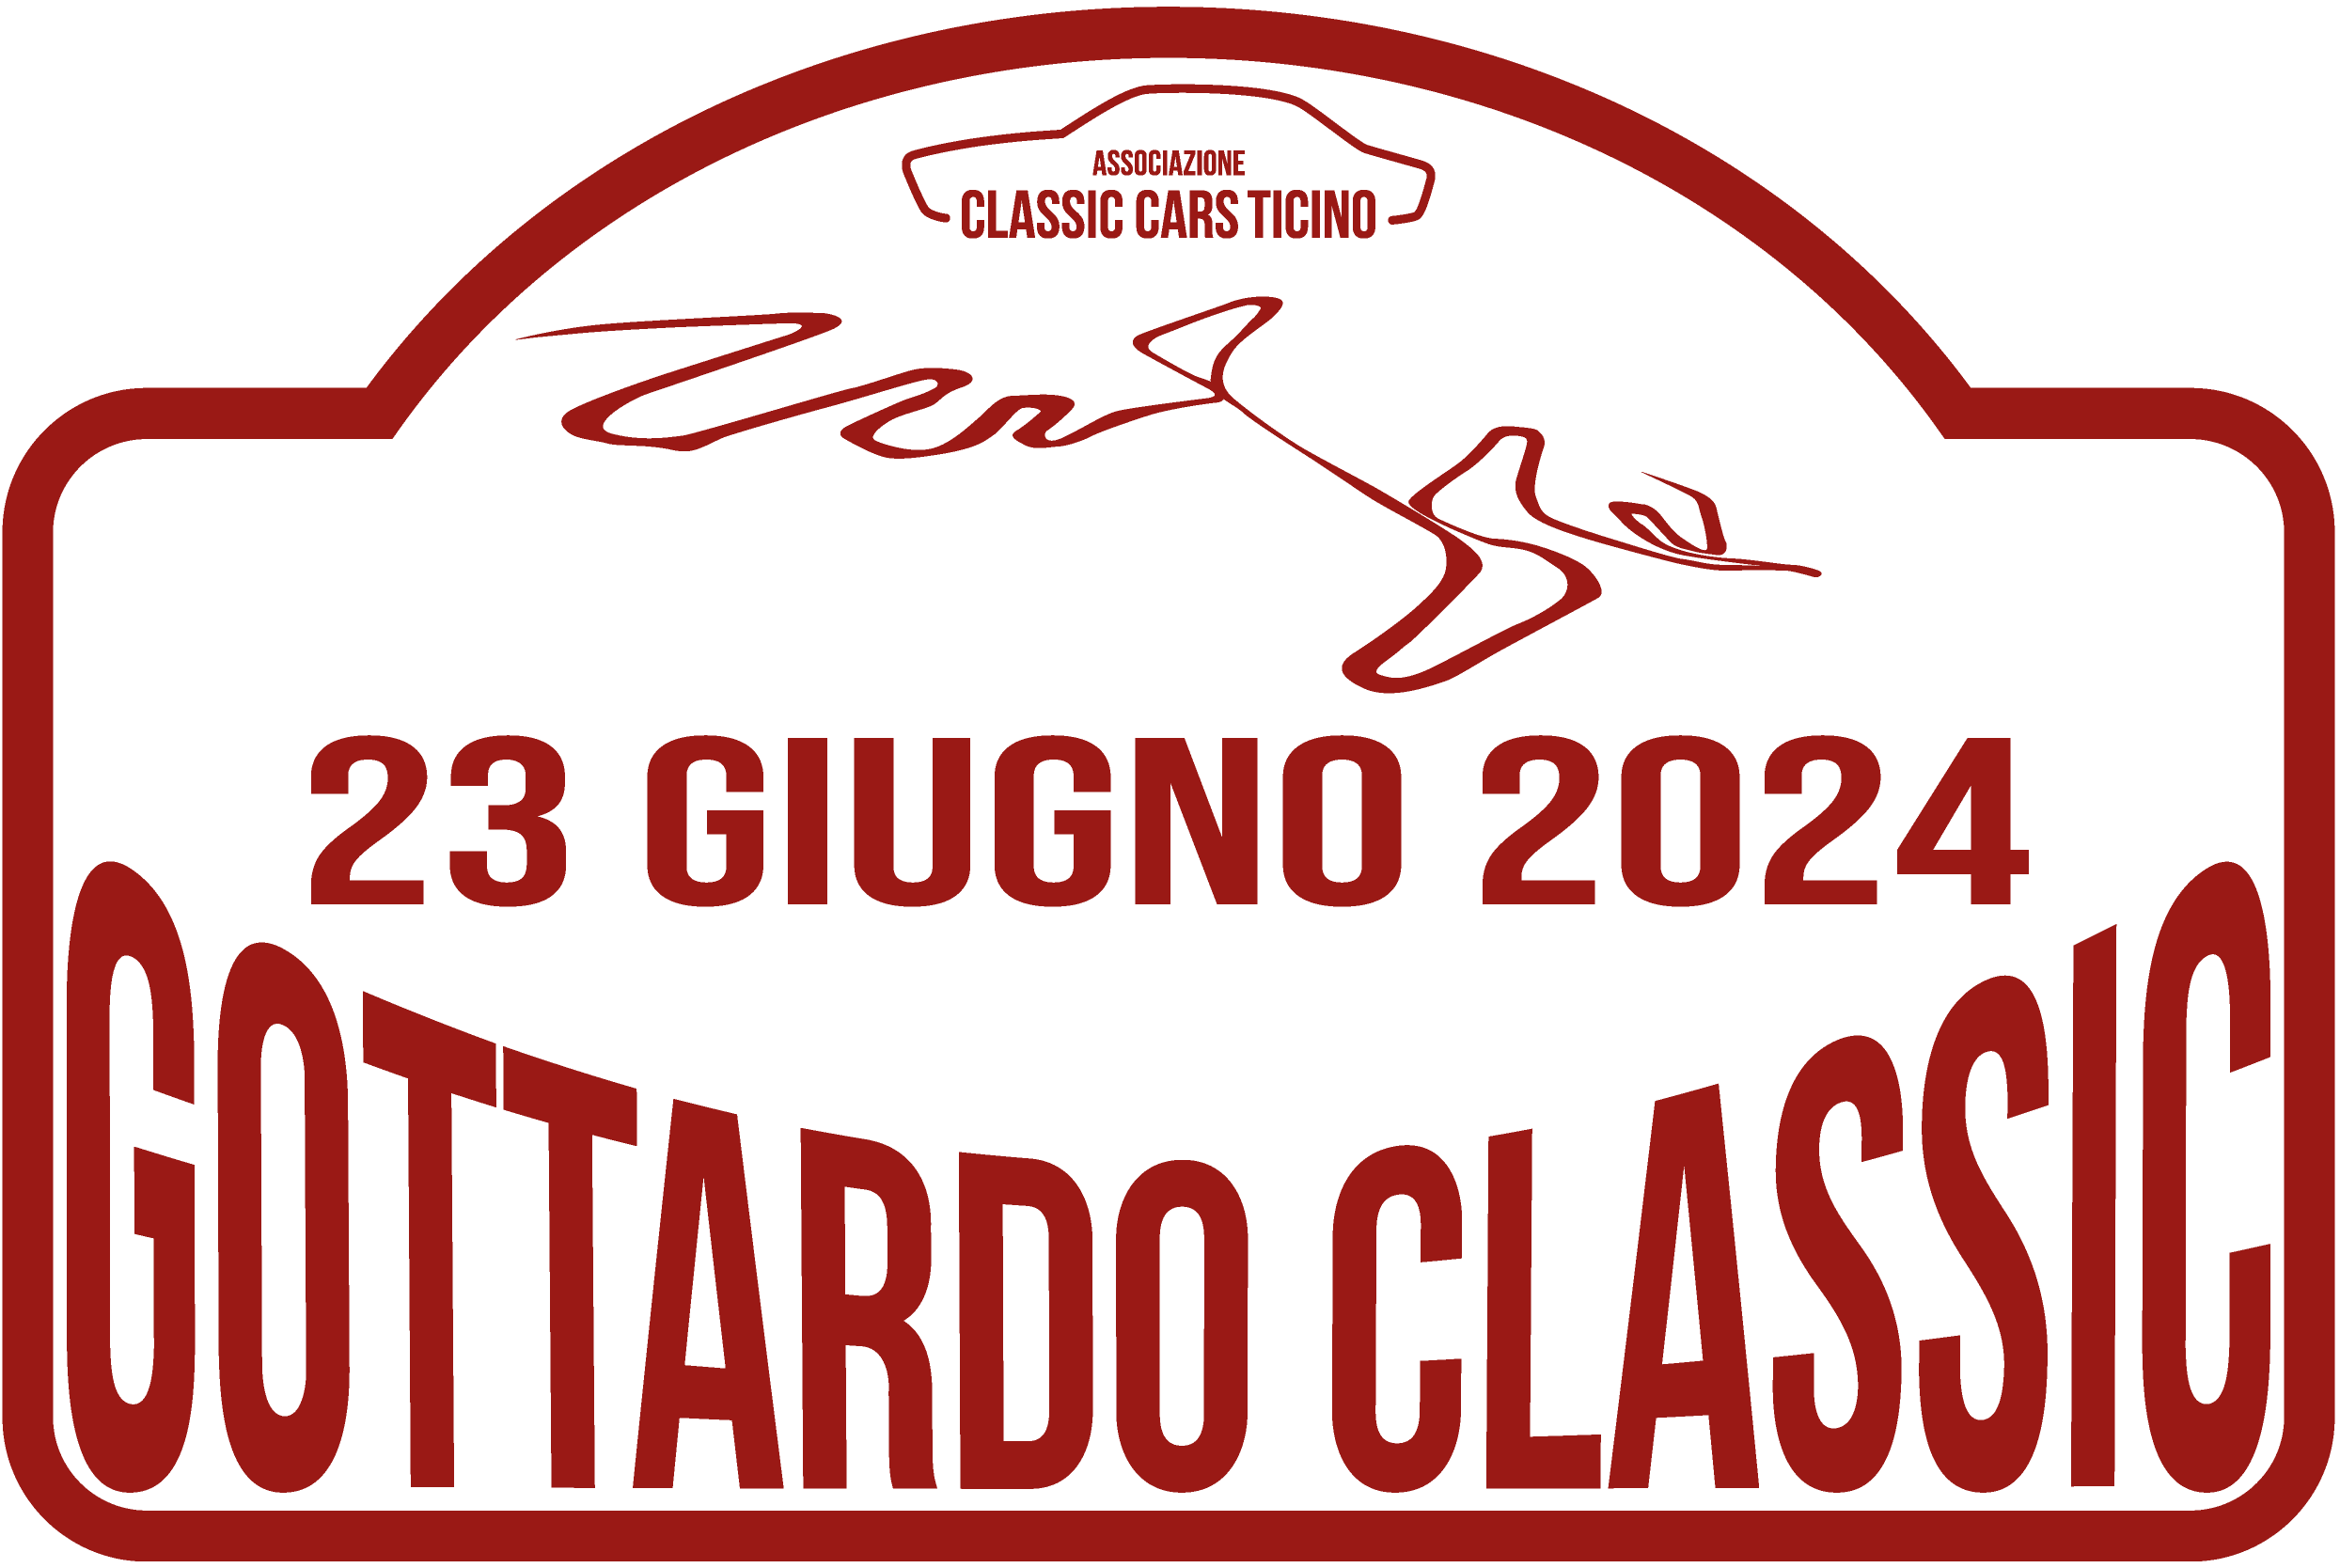 Gottardo Classic 2024